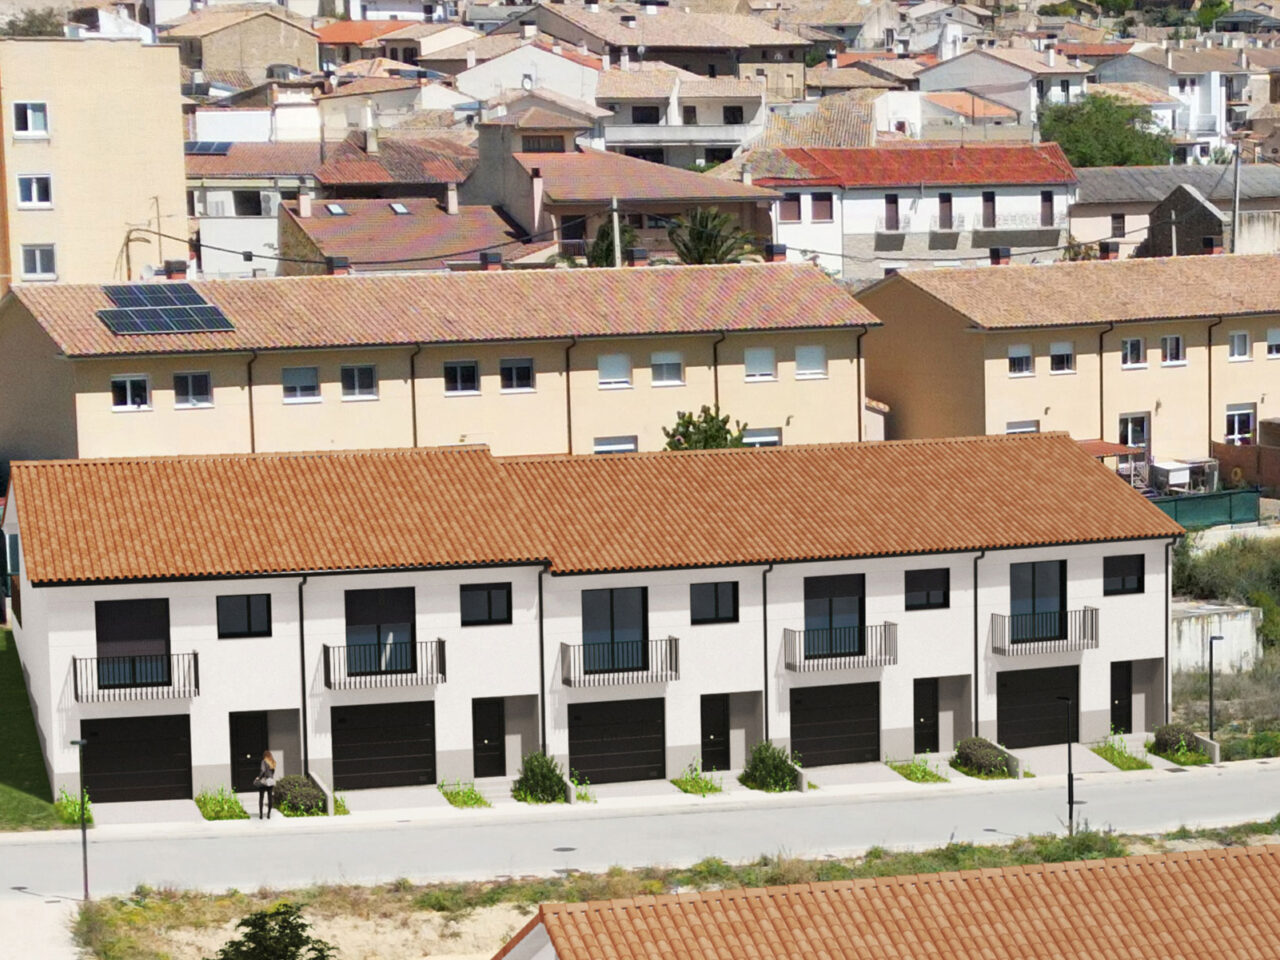 Promoción de 5 viviendas adosadas en Artajona